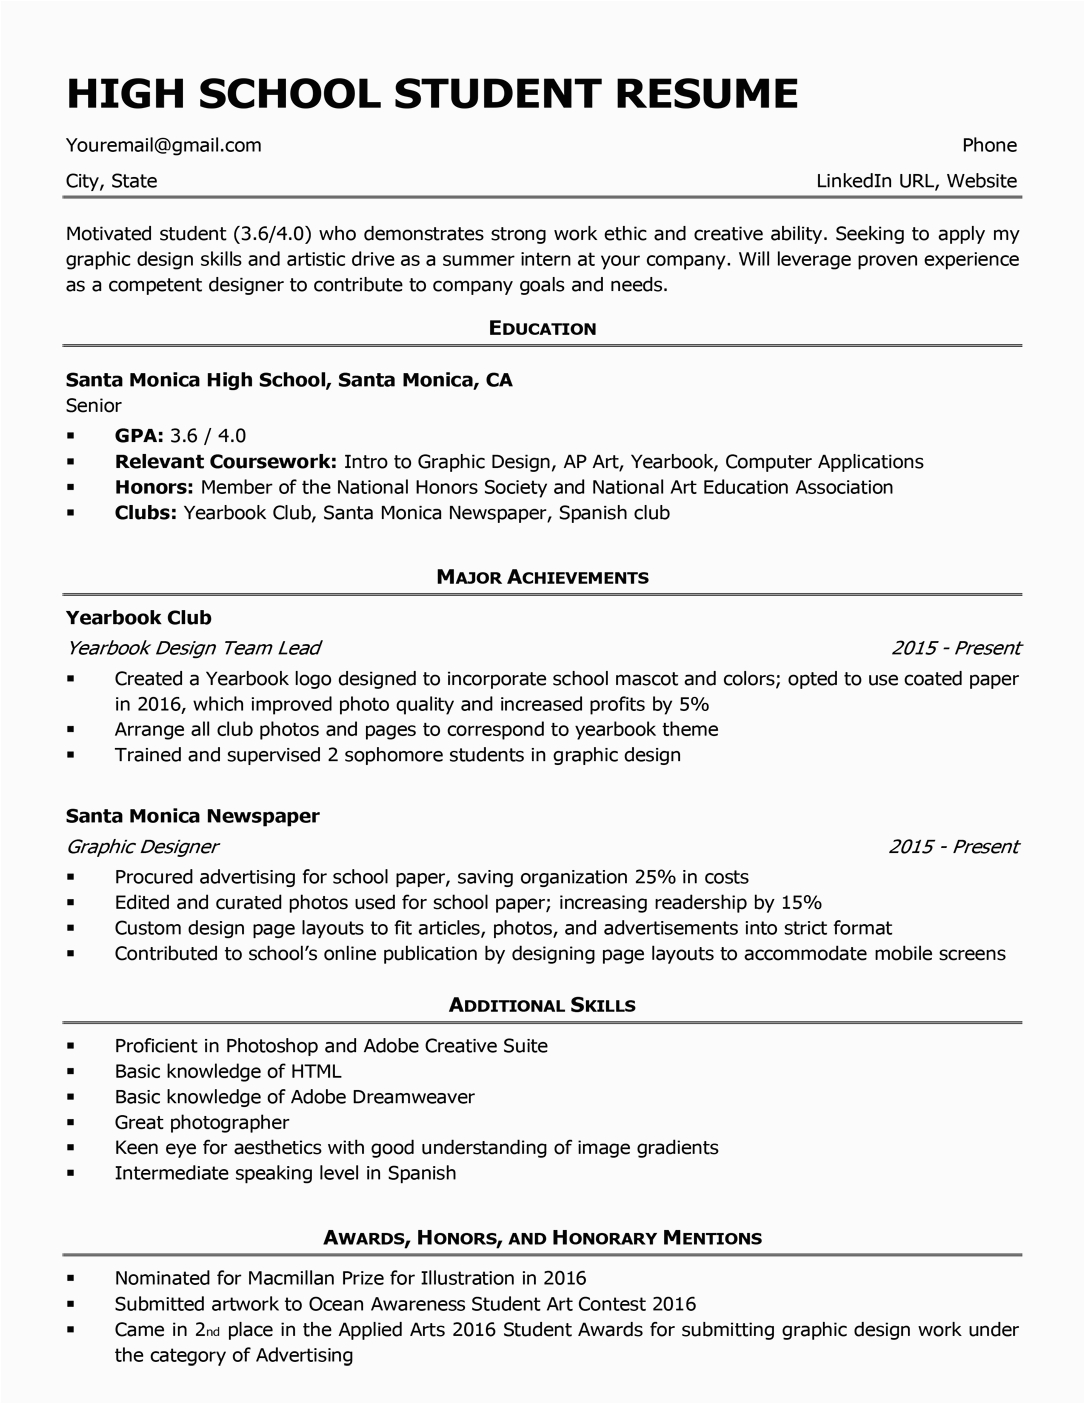 Sample Resume for Highschool Students Applying for Scholarships High School Resume Template & Writing Tips